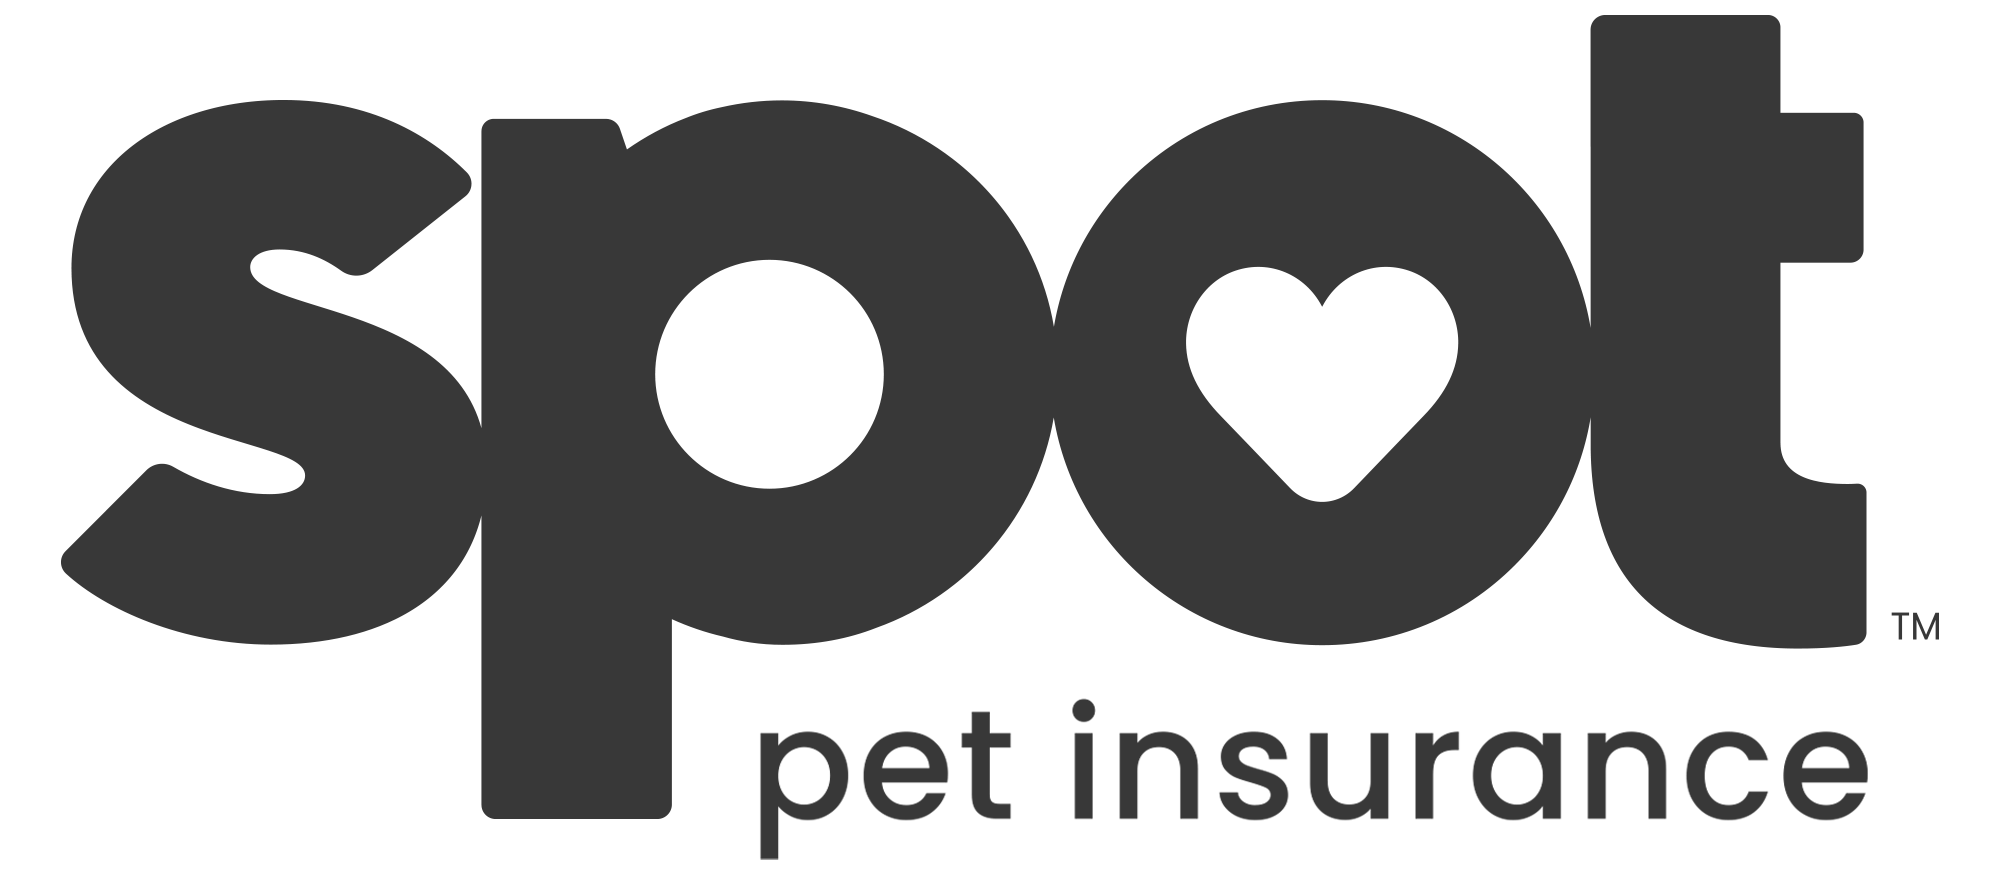 Spot Petinsurance Logo